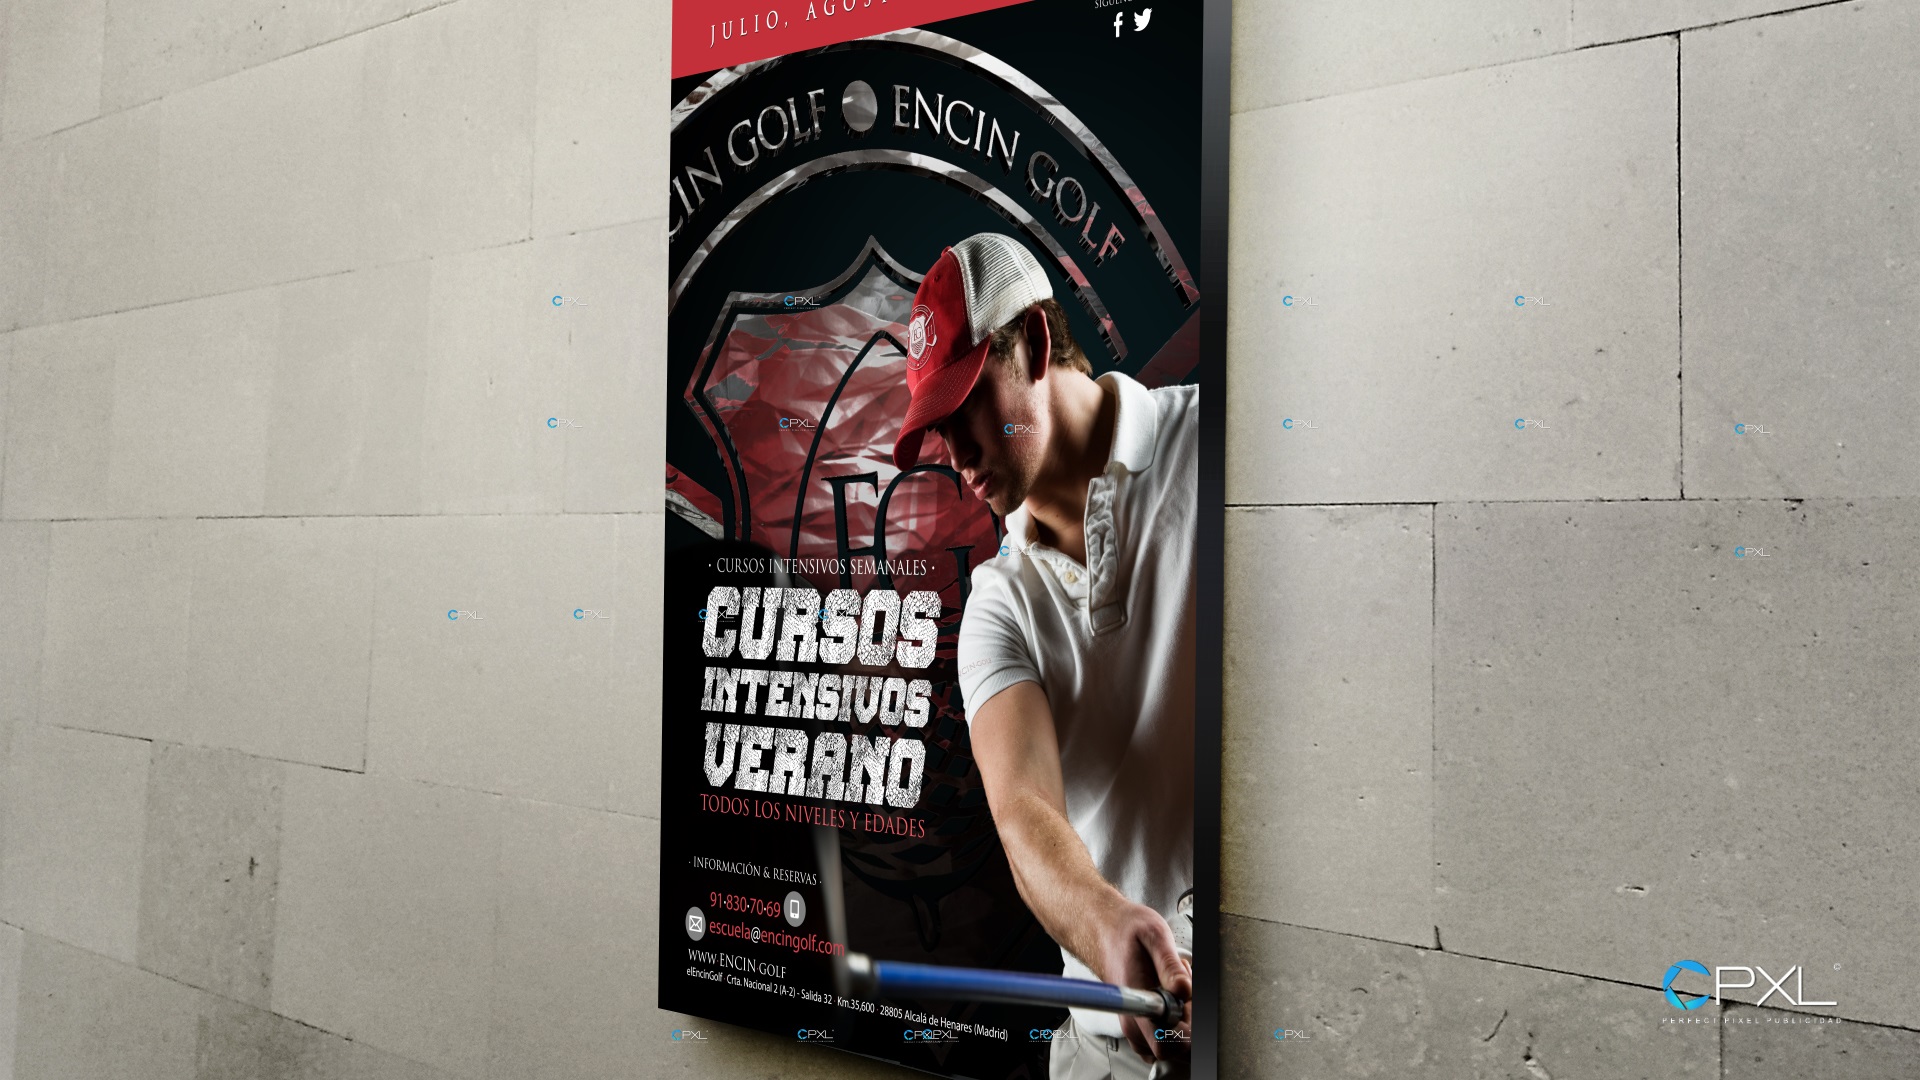 Campaña publicitaria para cursos intensivos de golf en Madrid (Encín Golf)